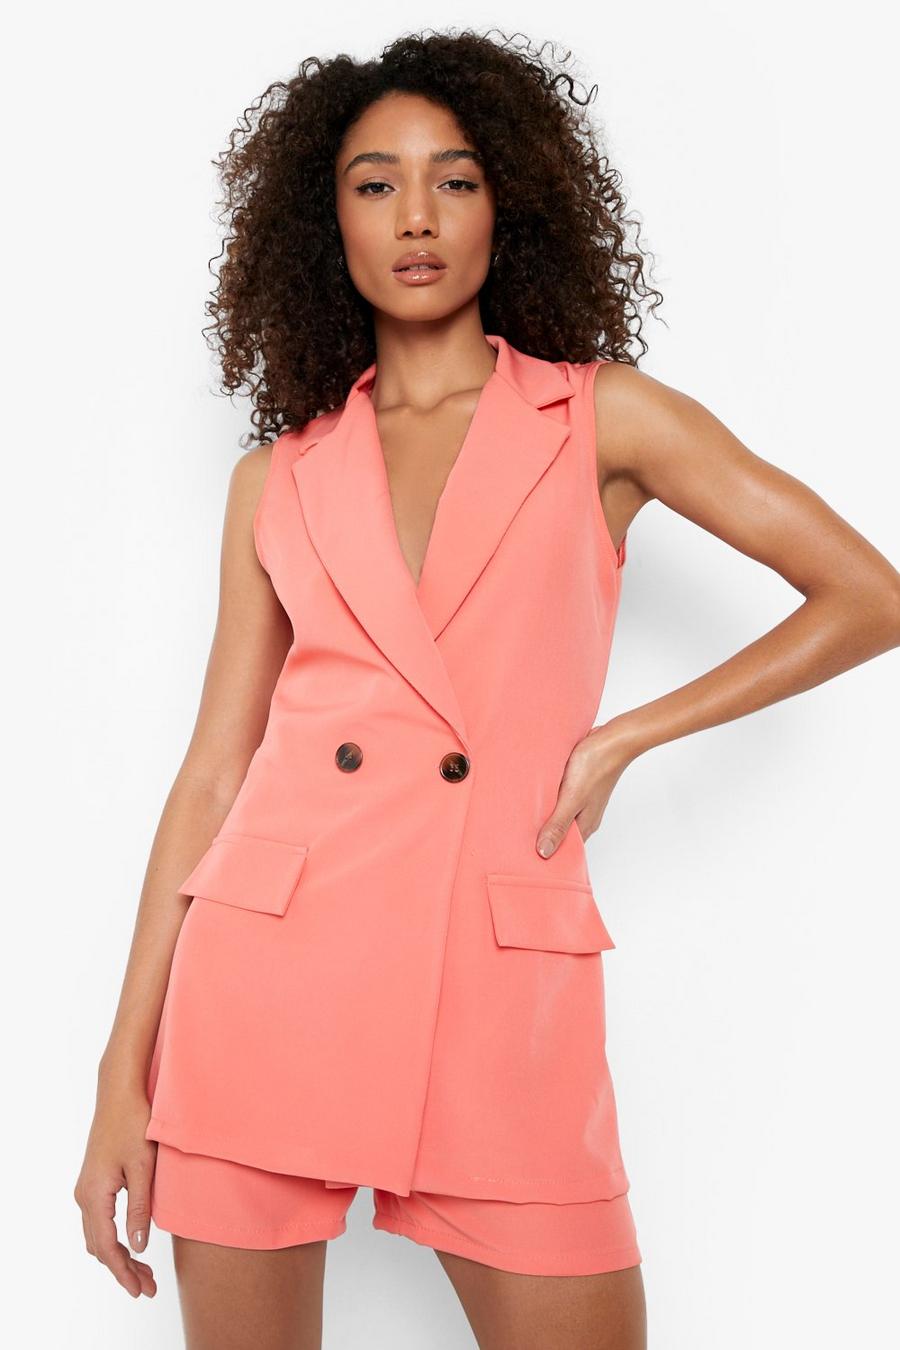 Coral pink Sportswear Sleeveless Blazer